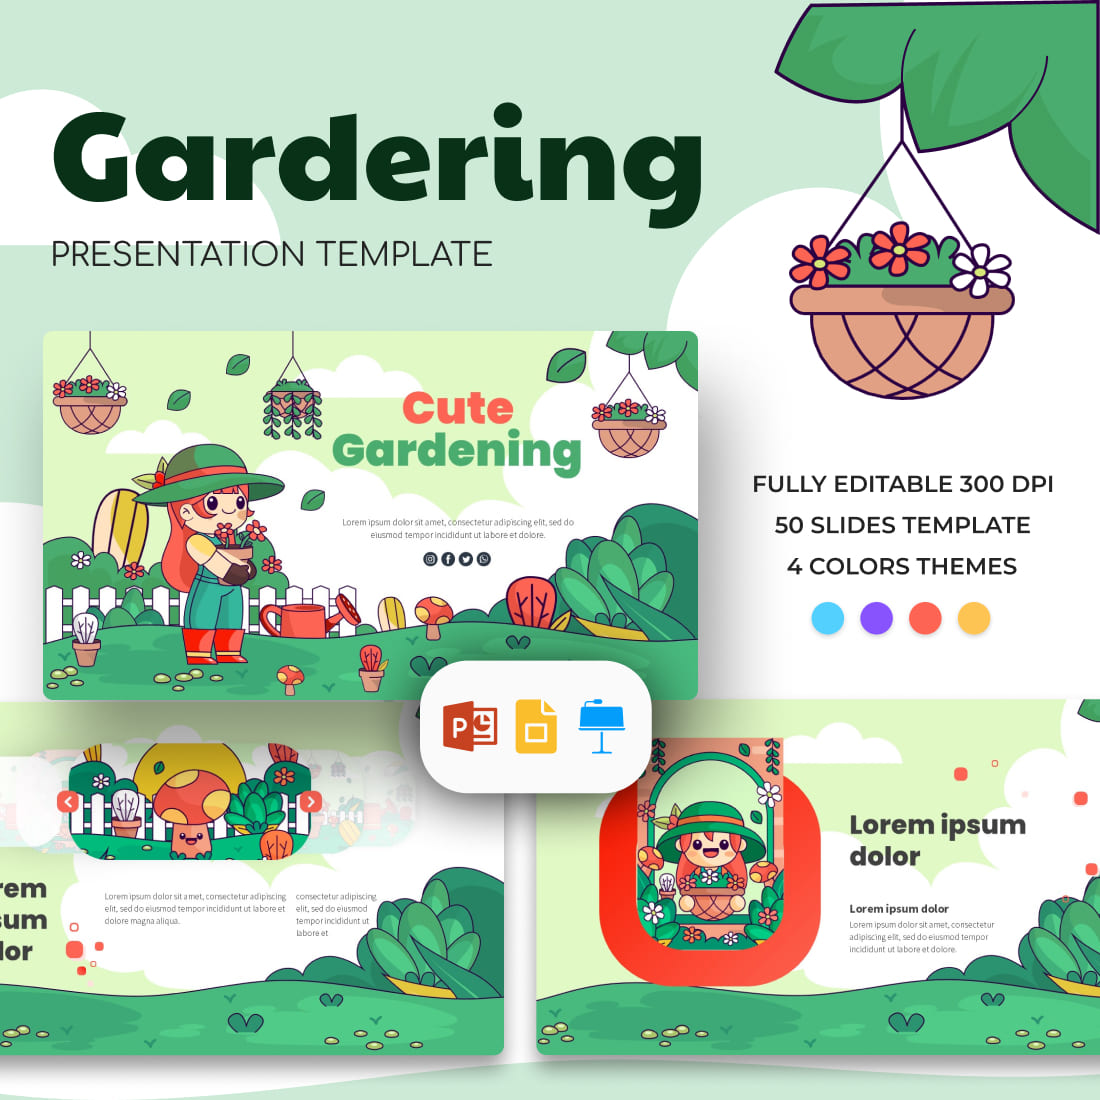 Cute Gardening Presentation Template.